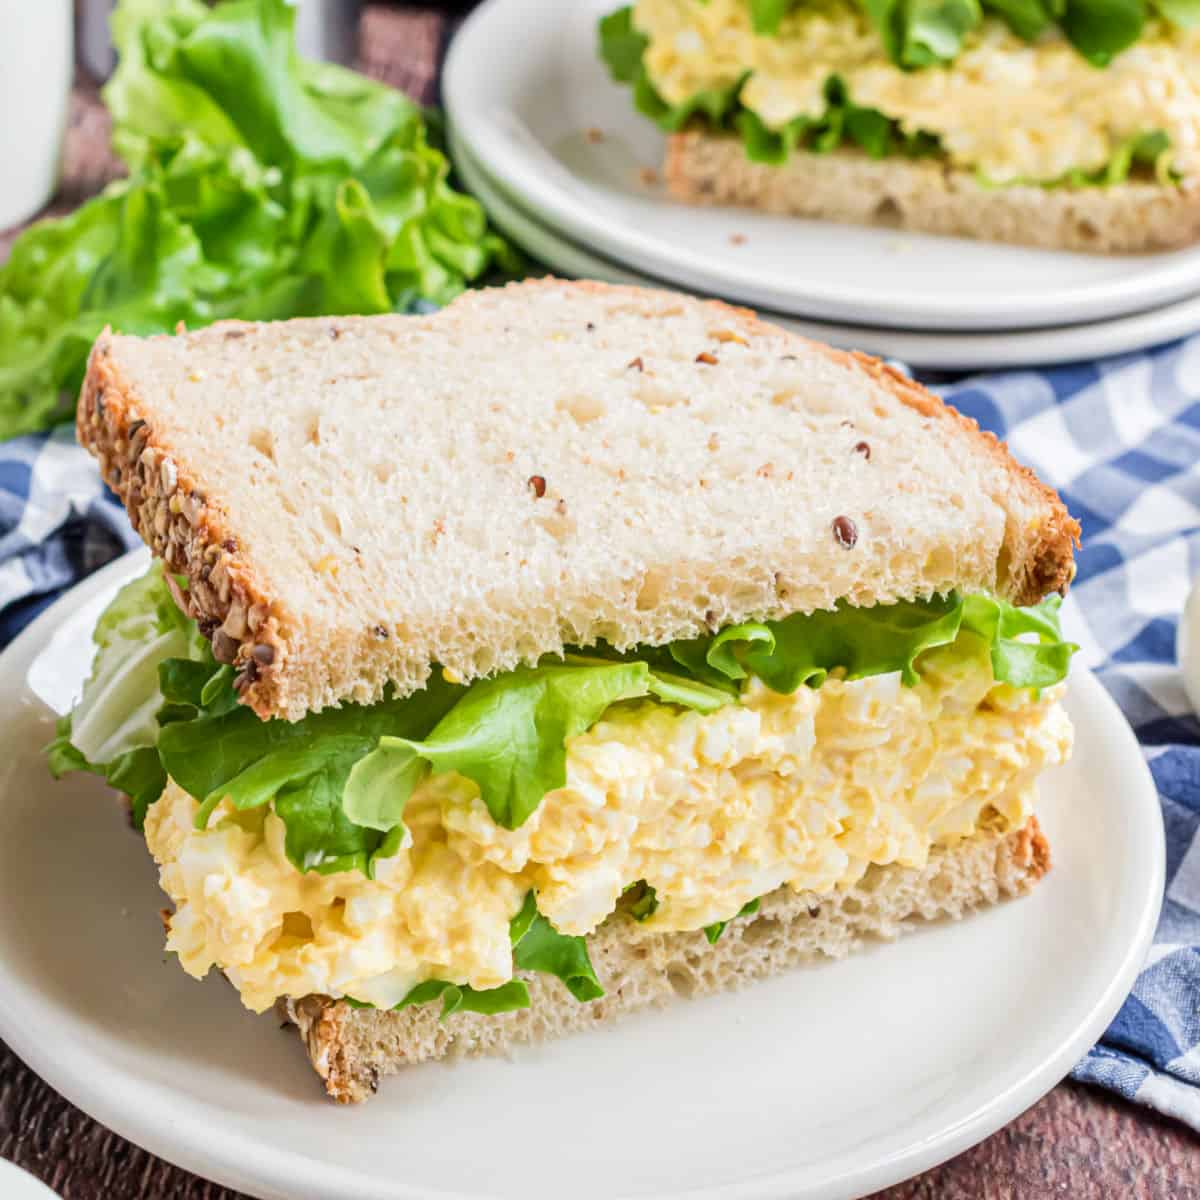 https://www.shugarysweets.com/wp-content/uploads/2019/04/egg-salad-recipe.jpg